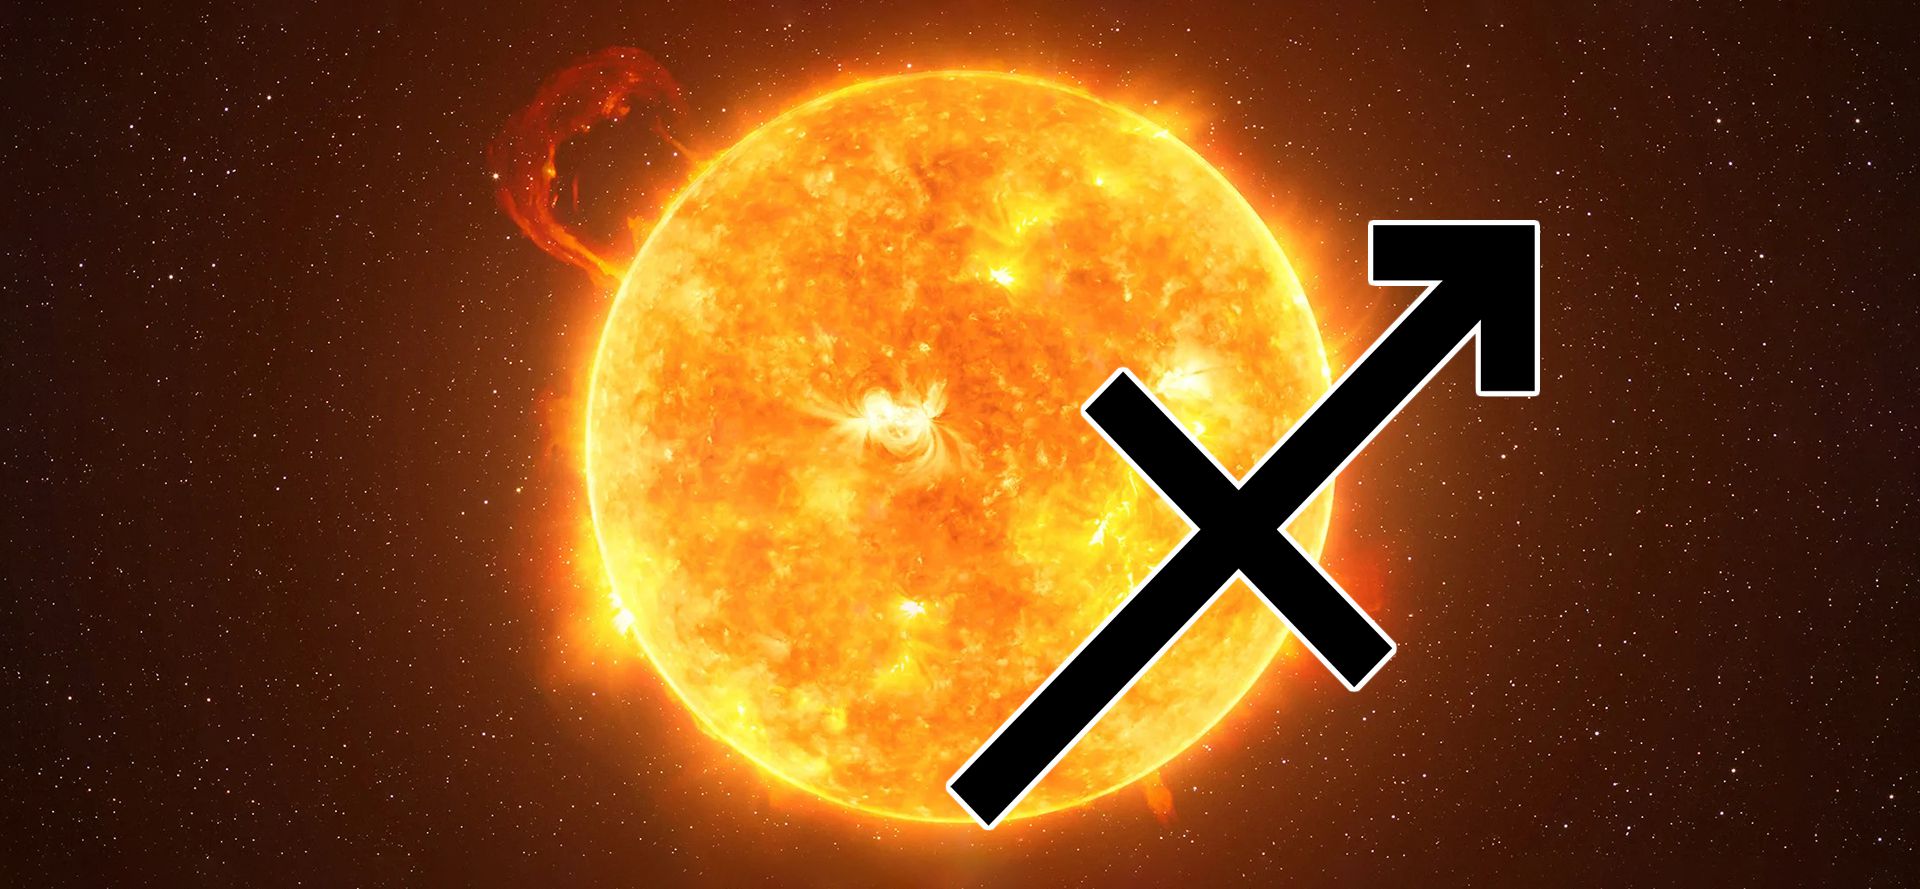 Sagittarius sign and Sun.